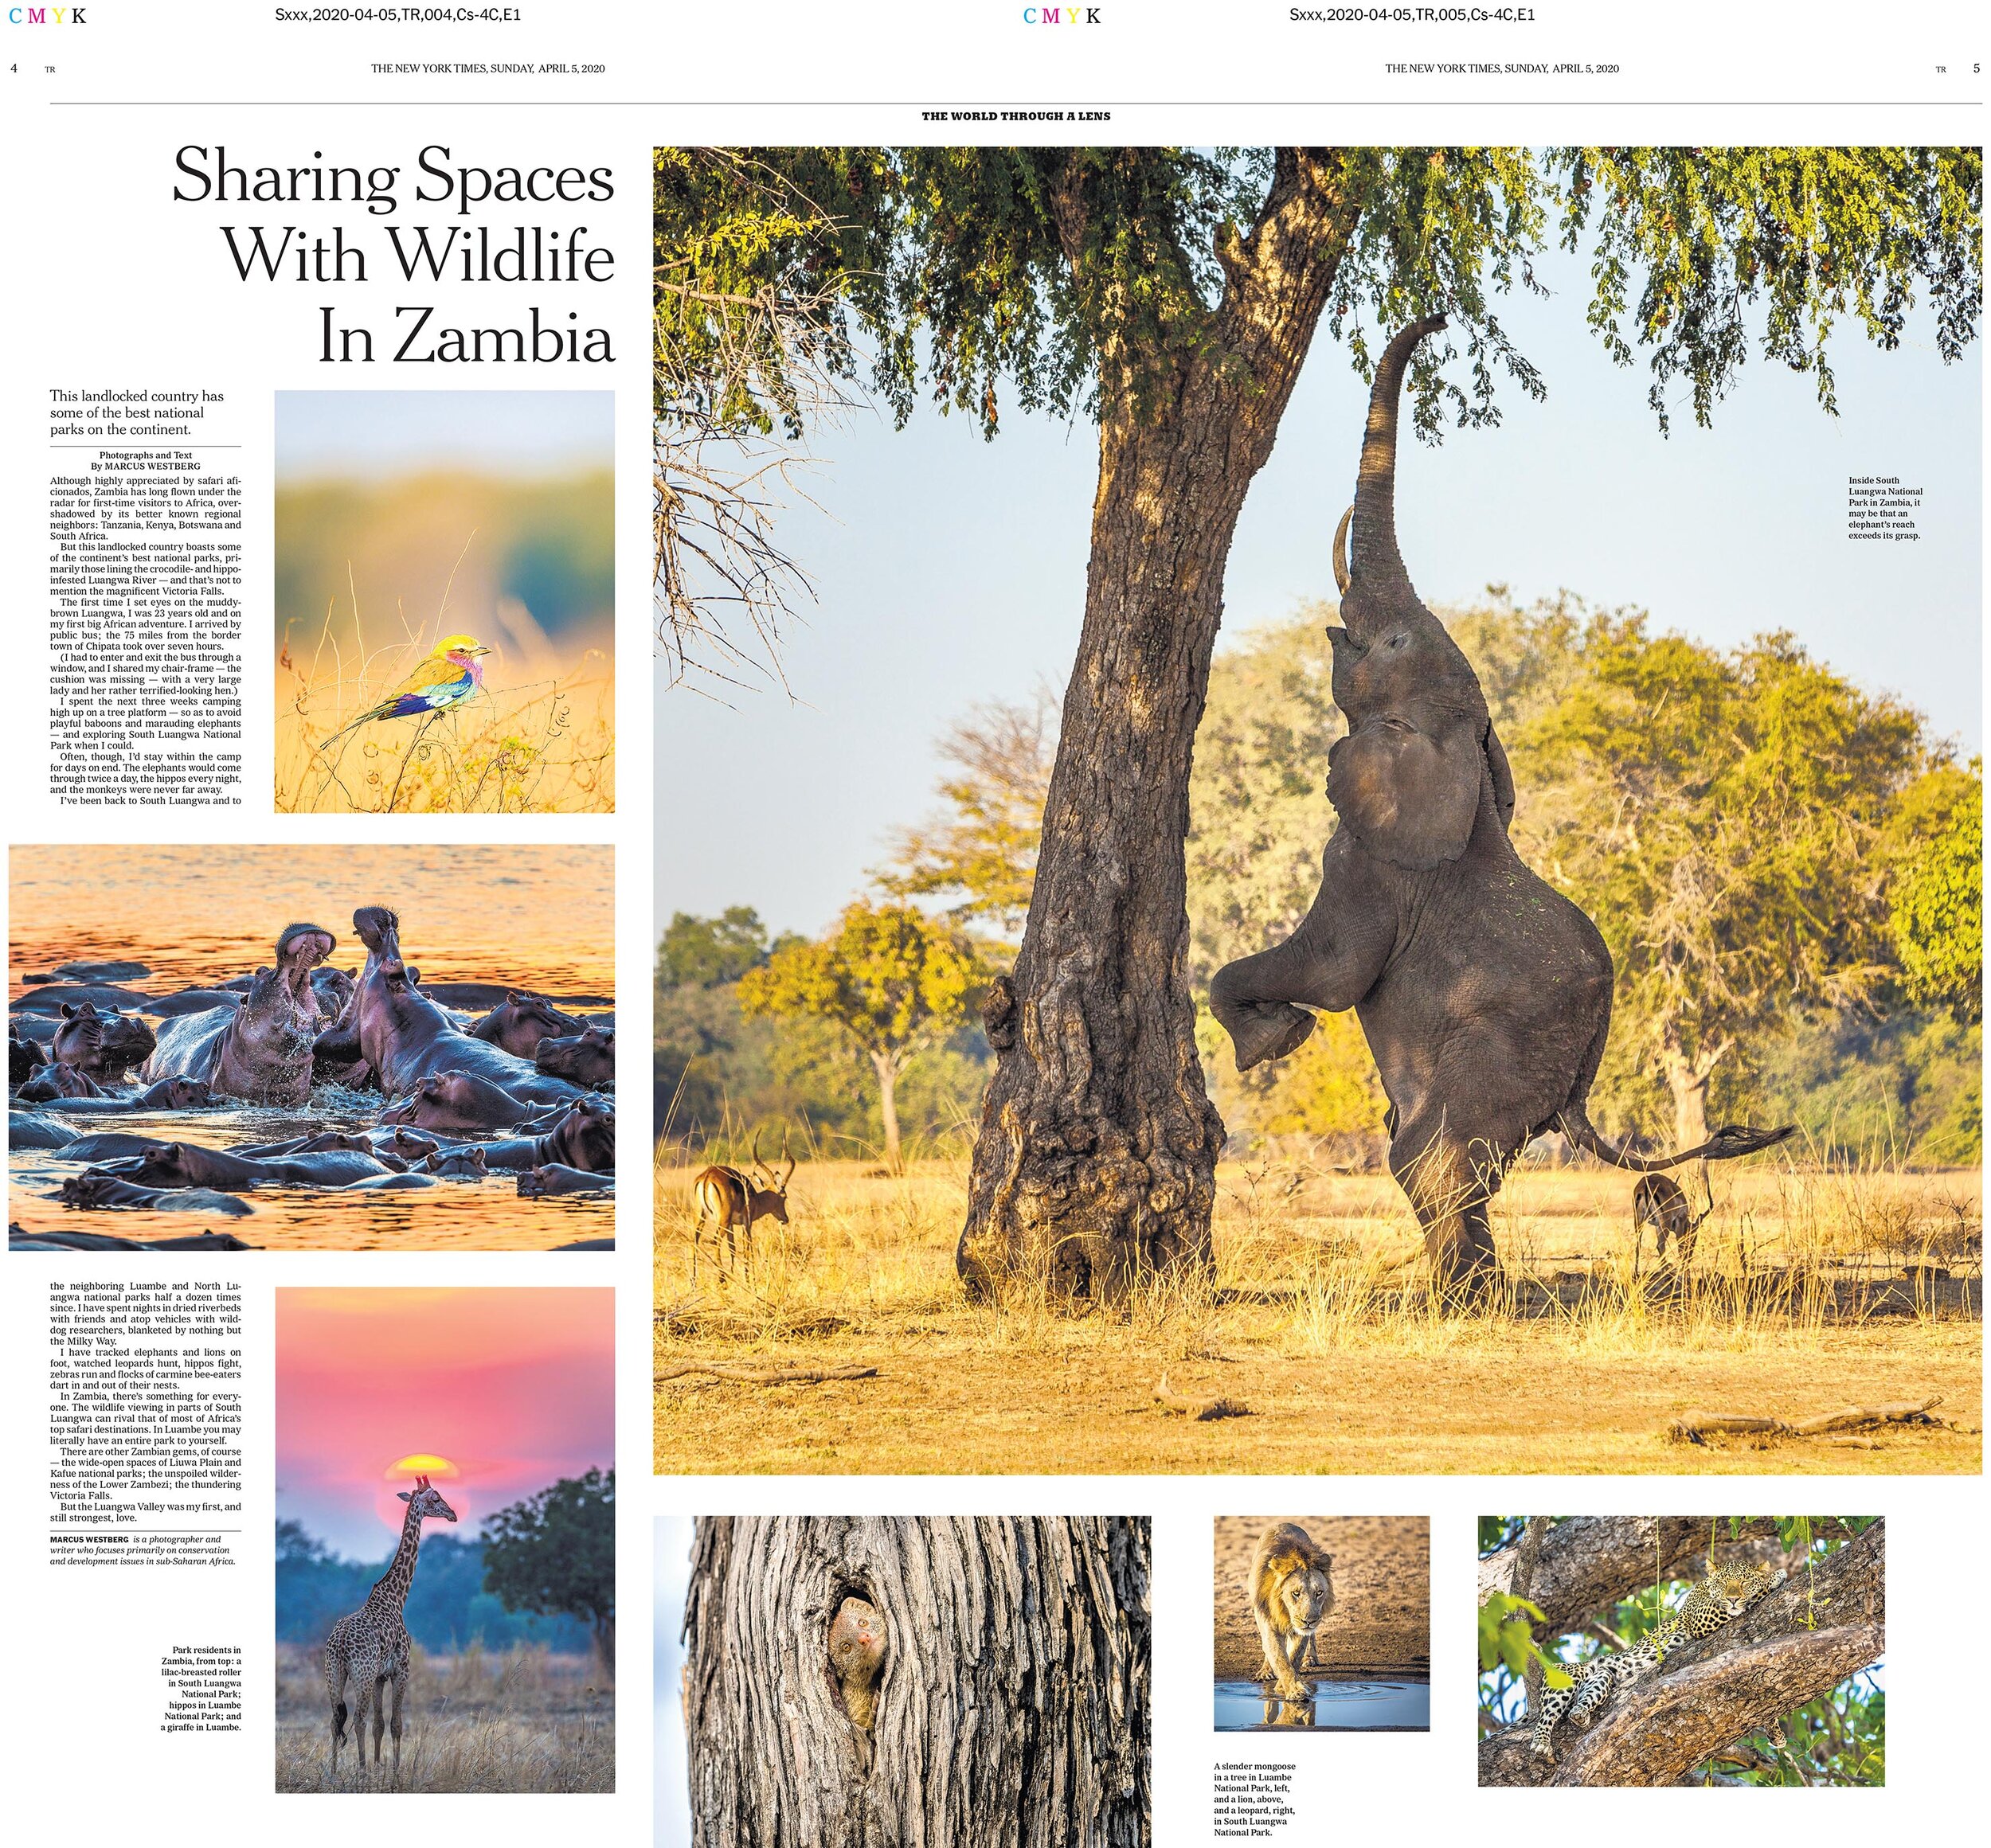 NEW YORK TIMES | Zambia